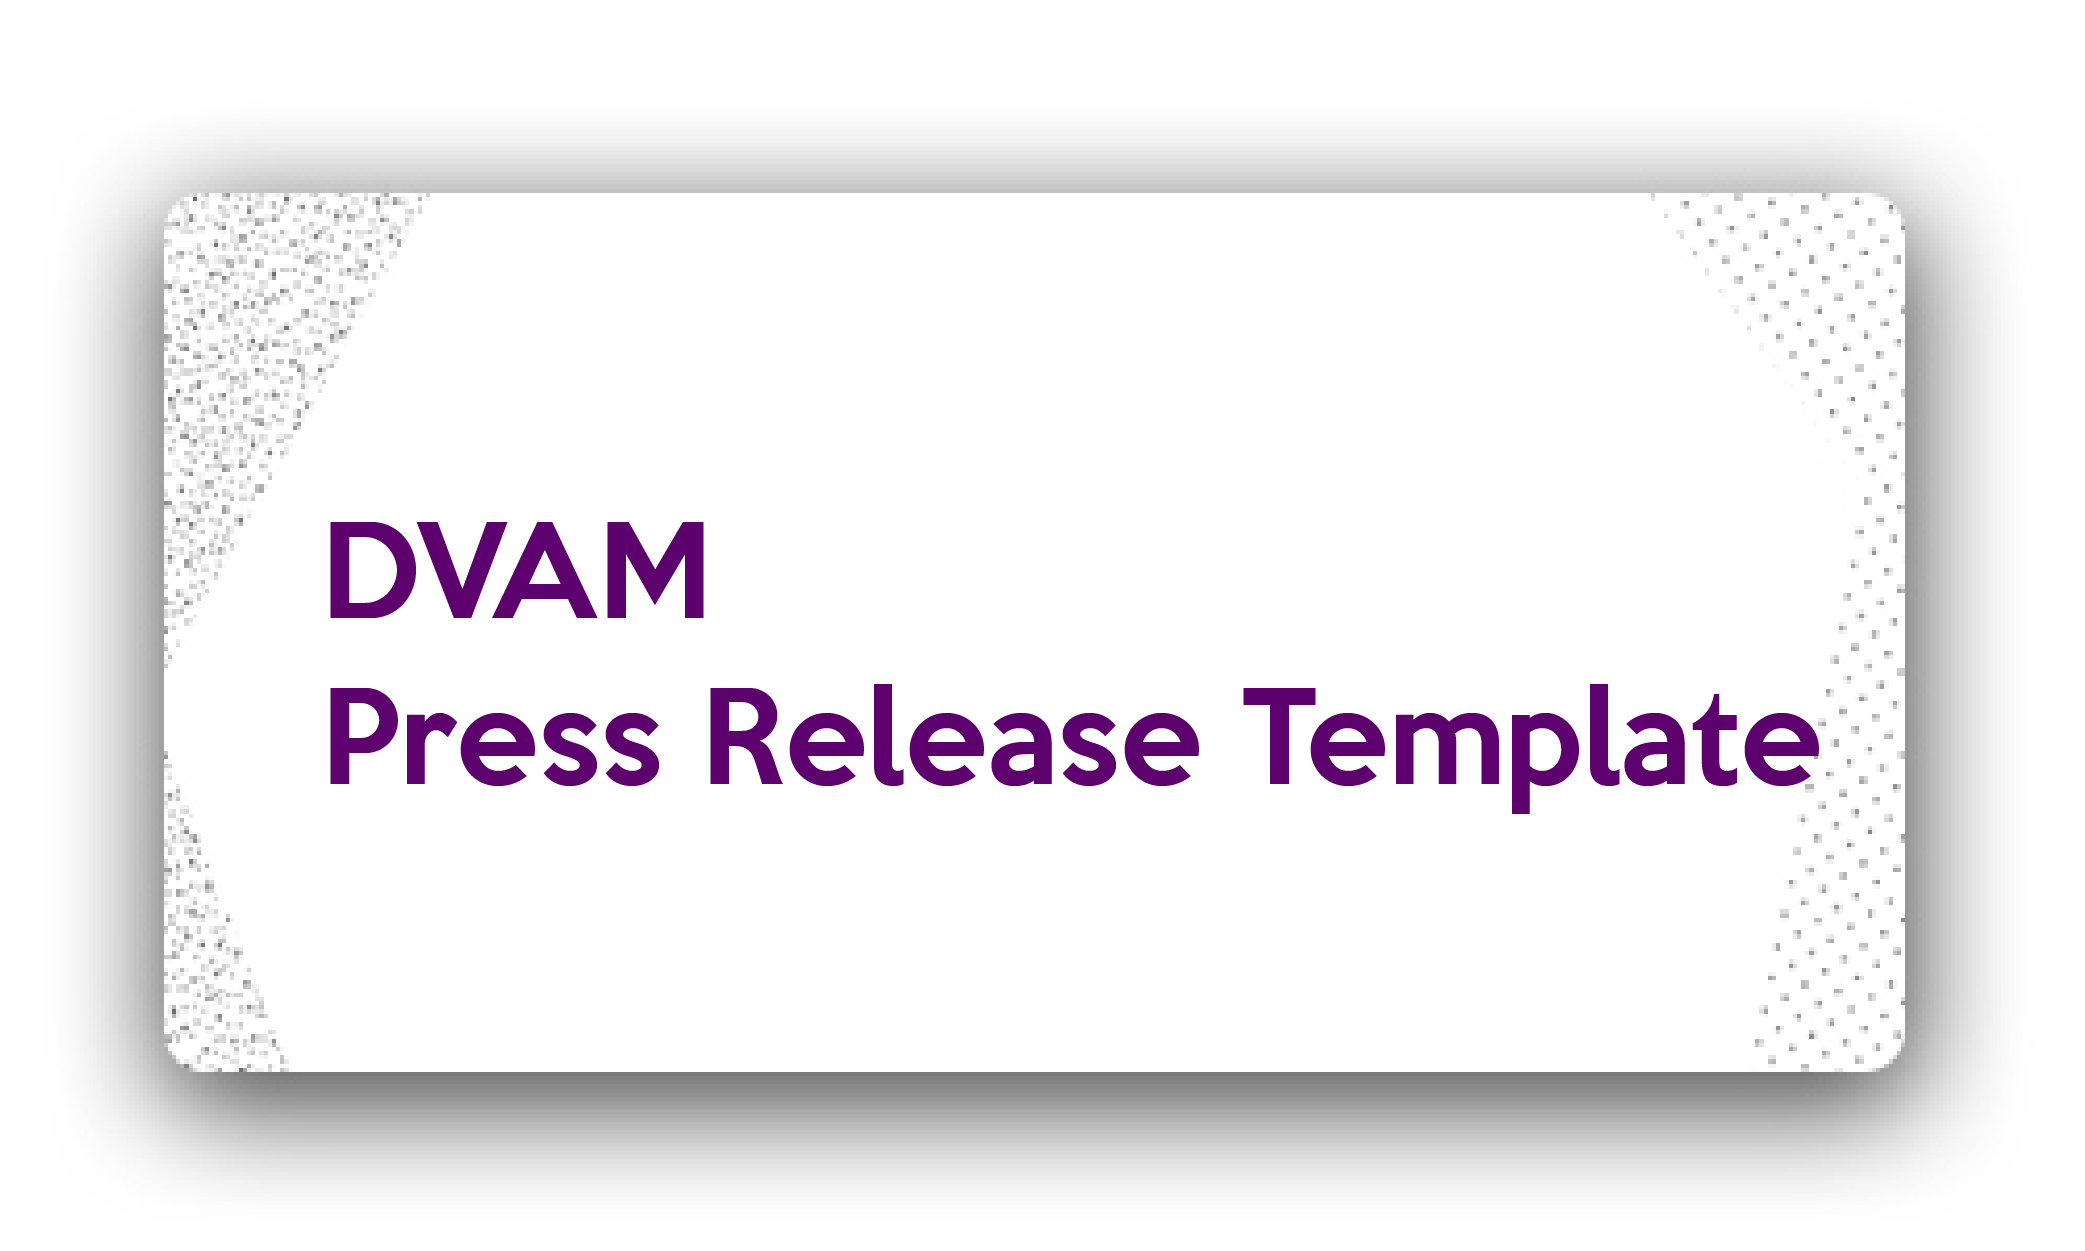 Title: DVAM Press Release Template